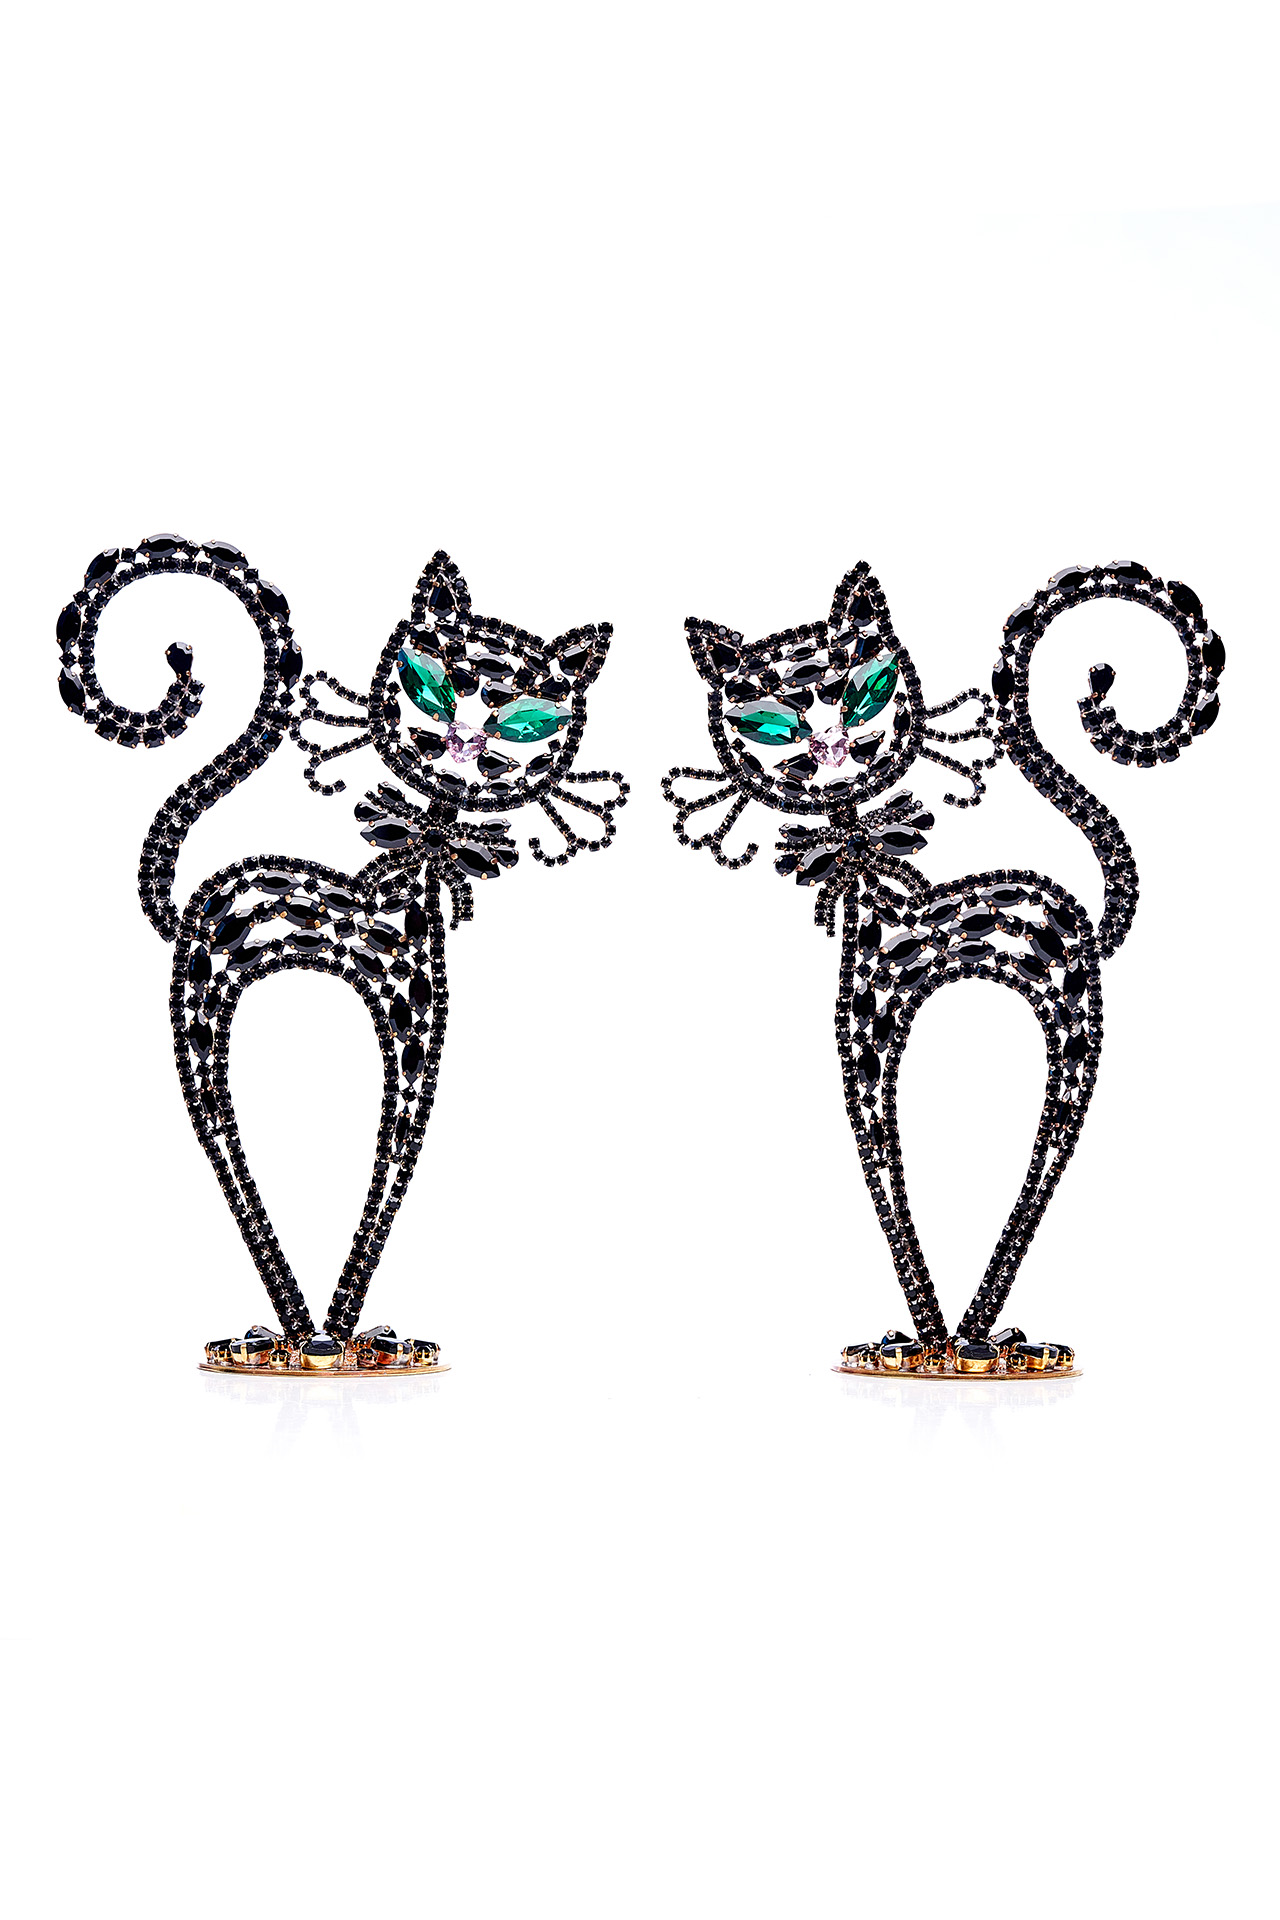 Rhinestones twin cats decoration handmade from black crystals